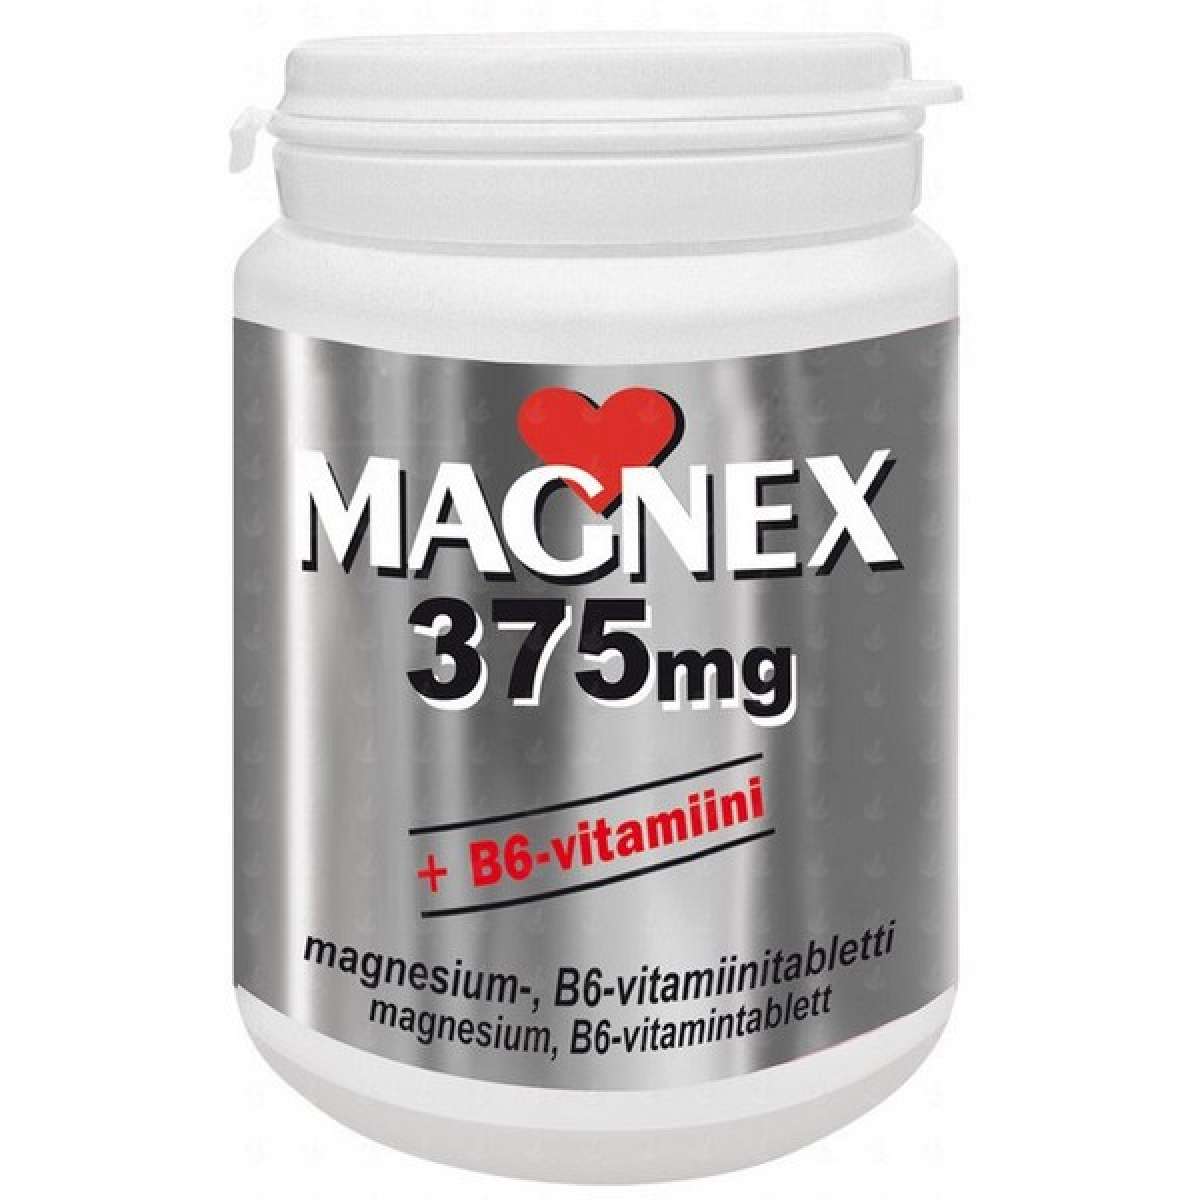 Б 6 витамин в таблетках. Витамины Magnex 375 MG + b6. Витамины с магнием и b6 Magnex. Magnex 375 +b6 - магний 375 +в6, 180 табл. Финские таблетки Magnex 375.